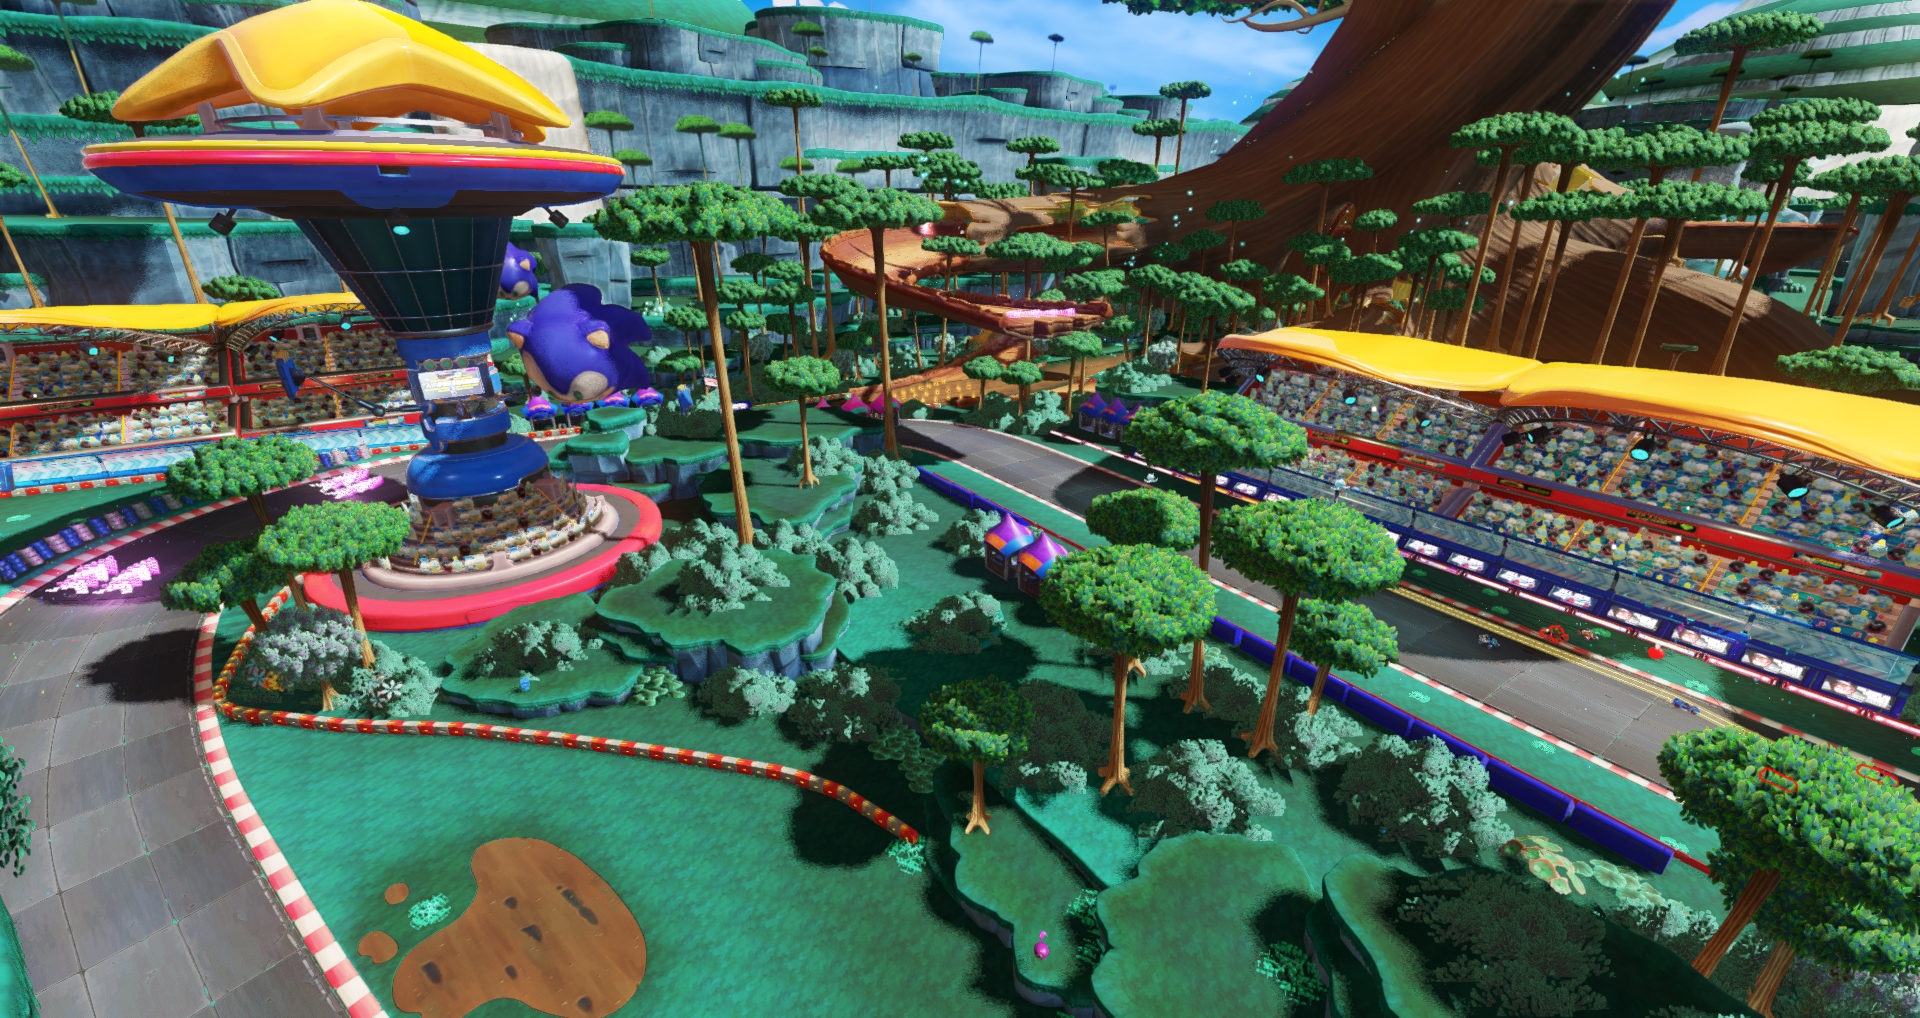 Team Sonic Racing Screenshots